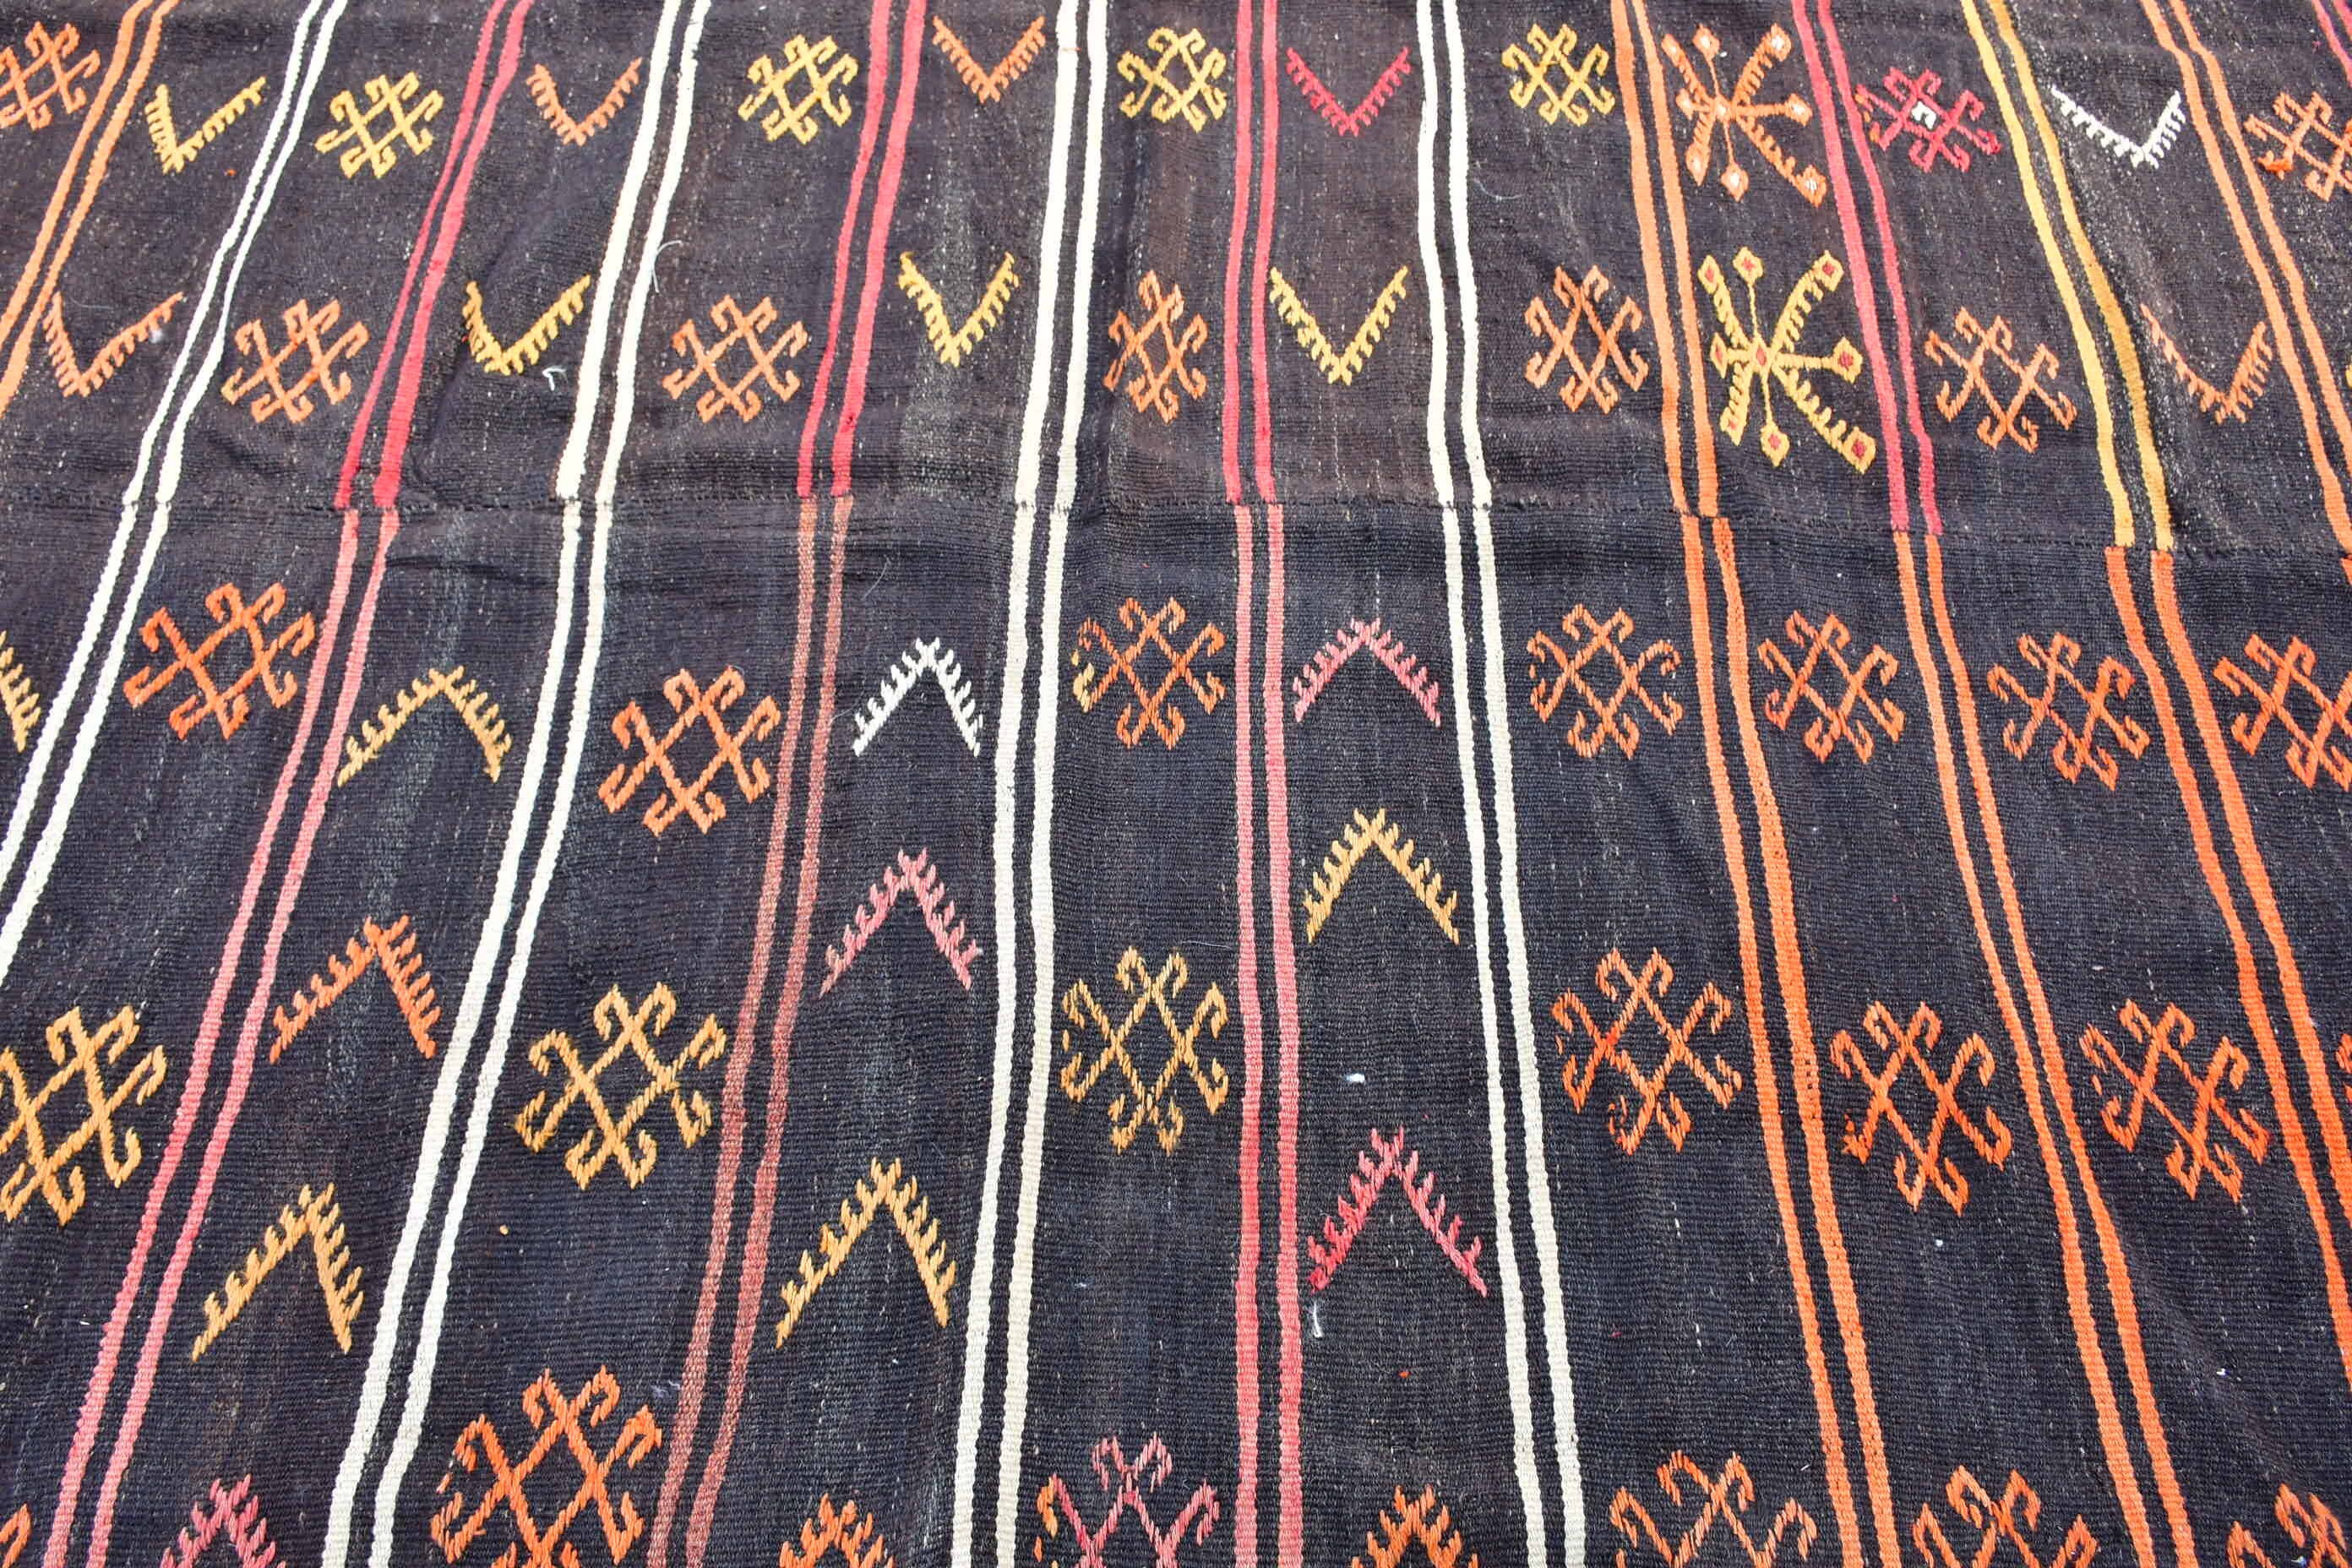 Oriental Rug, 6.5x10.9 ft Oversize Rug, Black Oriental Rugs, Tribal Rug, Living Room Rugs, Vintage Rug, Turkish Rugs, Home Decor Rug, Kilim